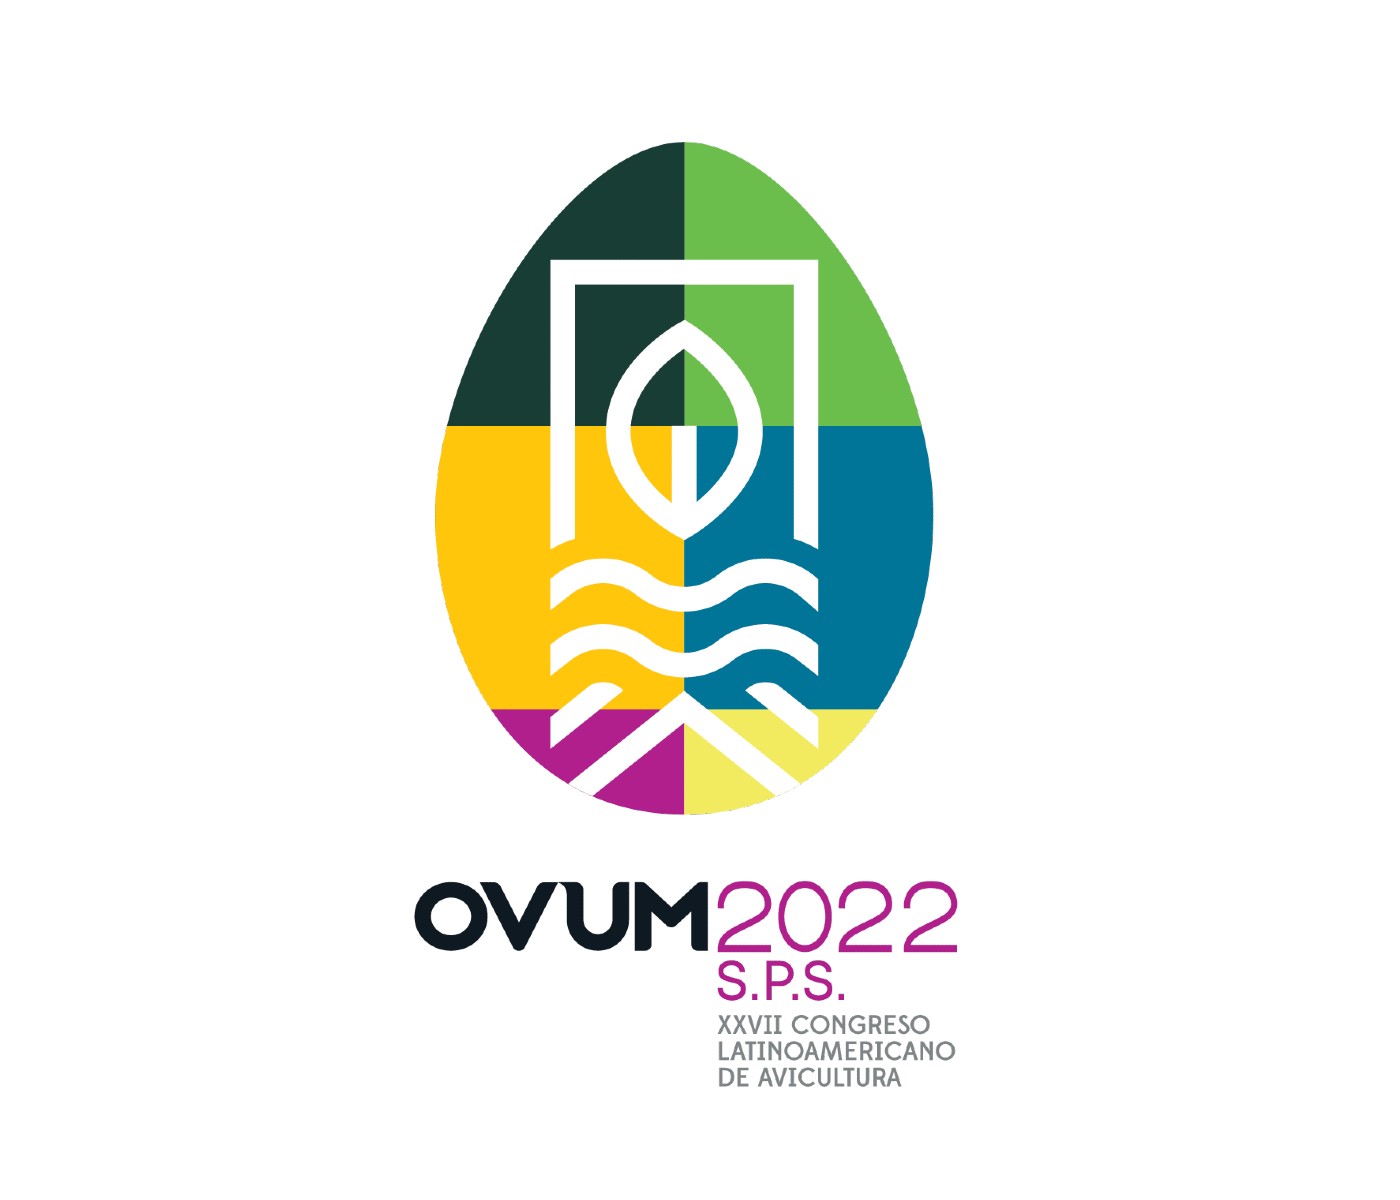 XXVII Congreso Latinoamericano de Avicultura, OVUM 2022: ¿Cómo asistir?